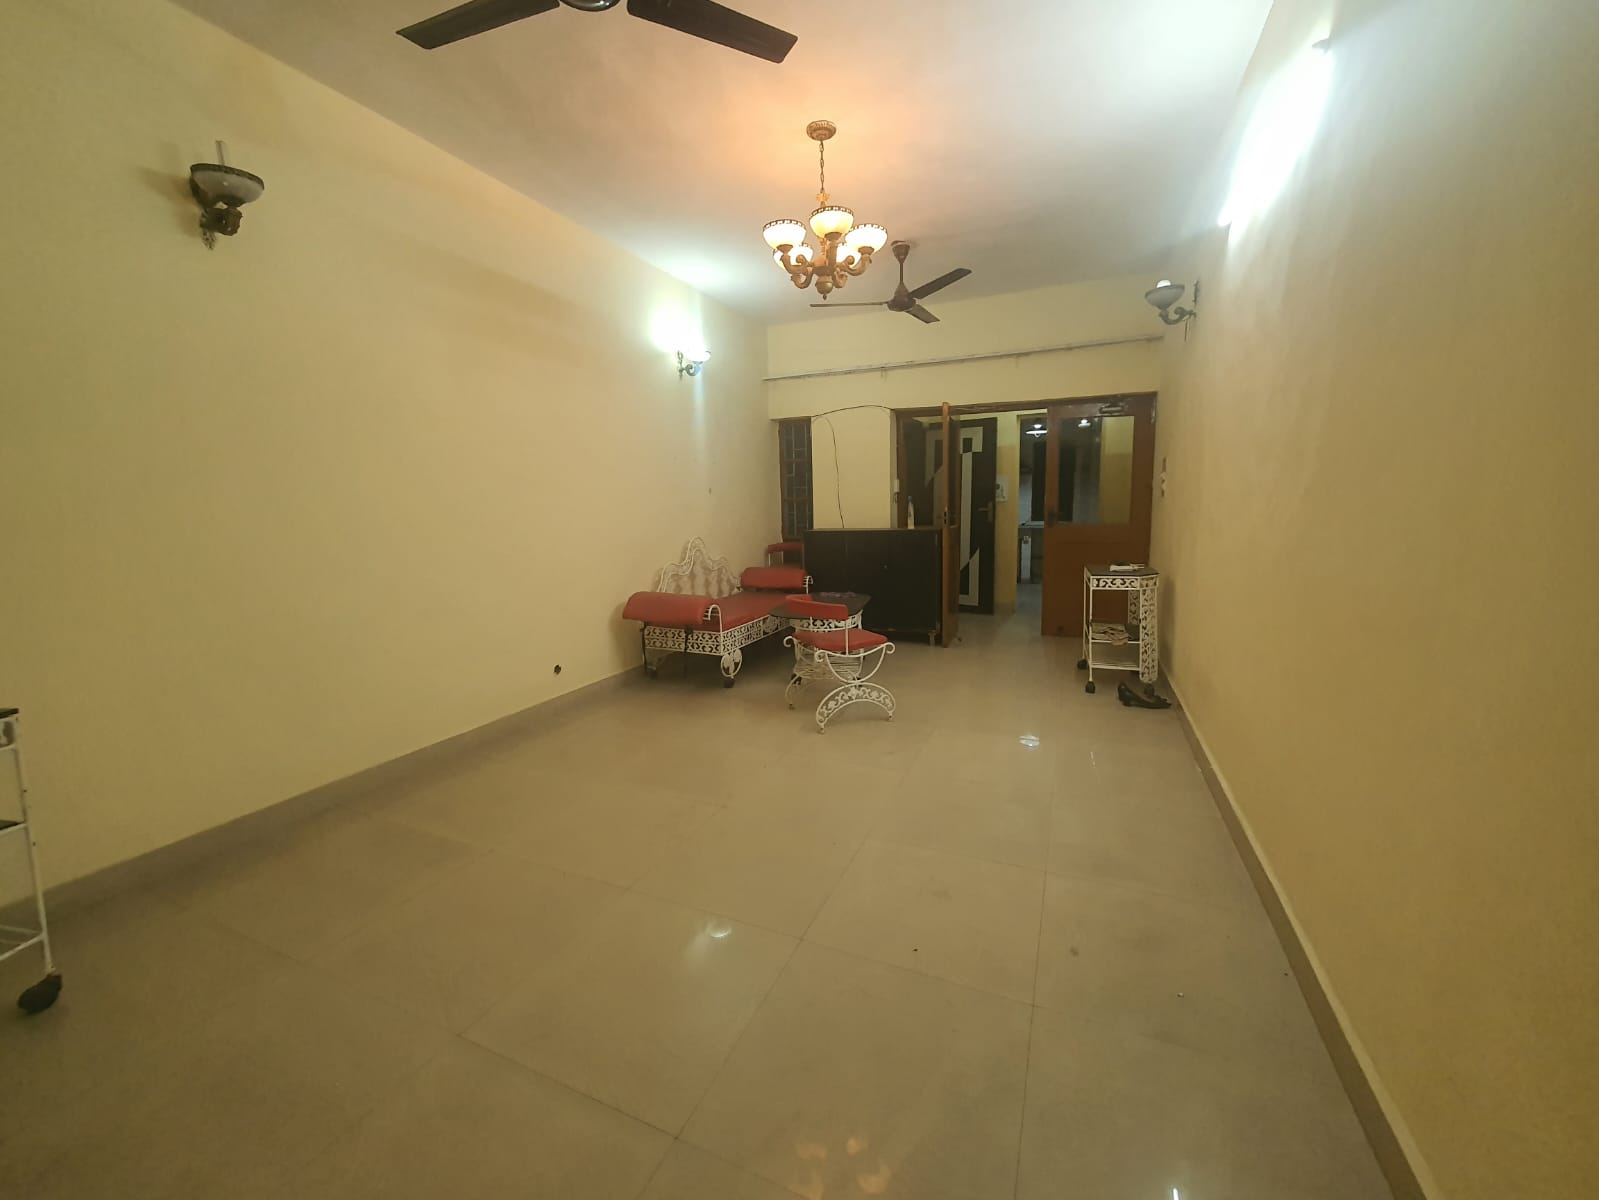 Luxurious Living: 2 BHK for Rent in C4D Block, Janakpuri | Park Views, Modern Kitchen, Ideal for Families | Janakpuri Homes